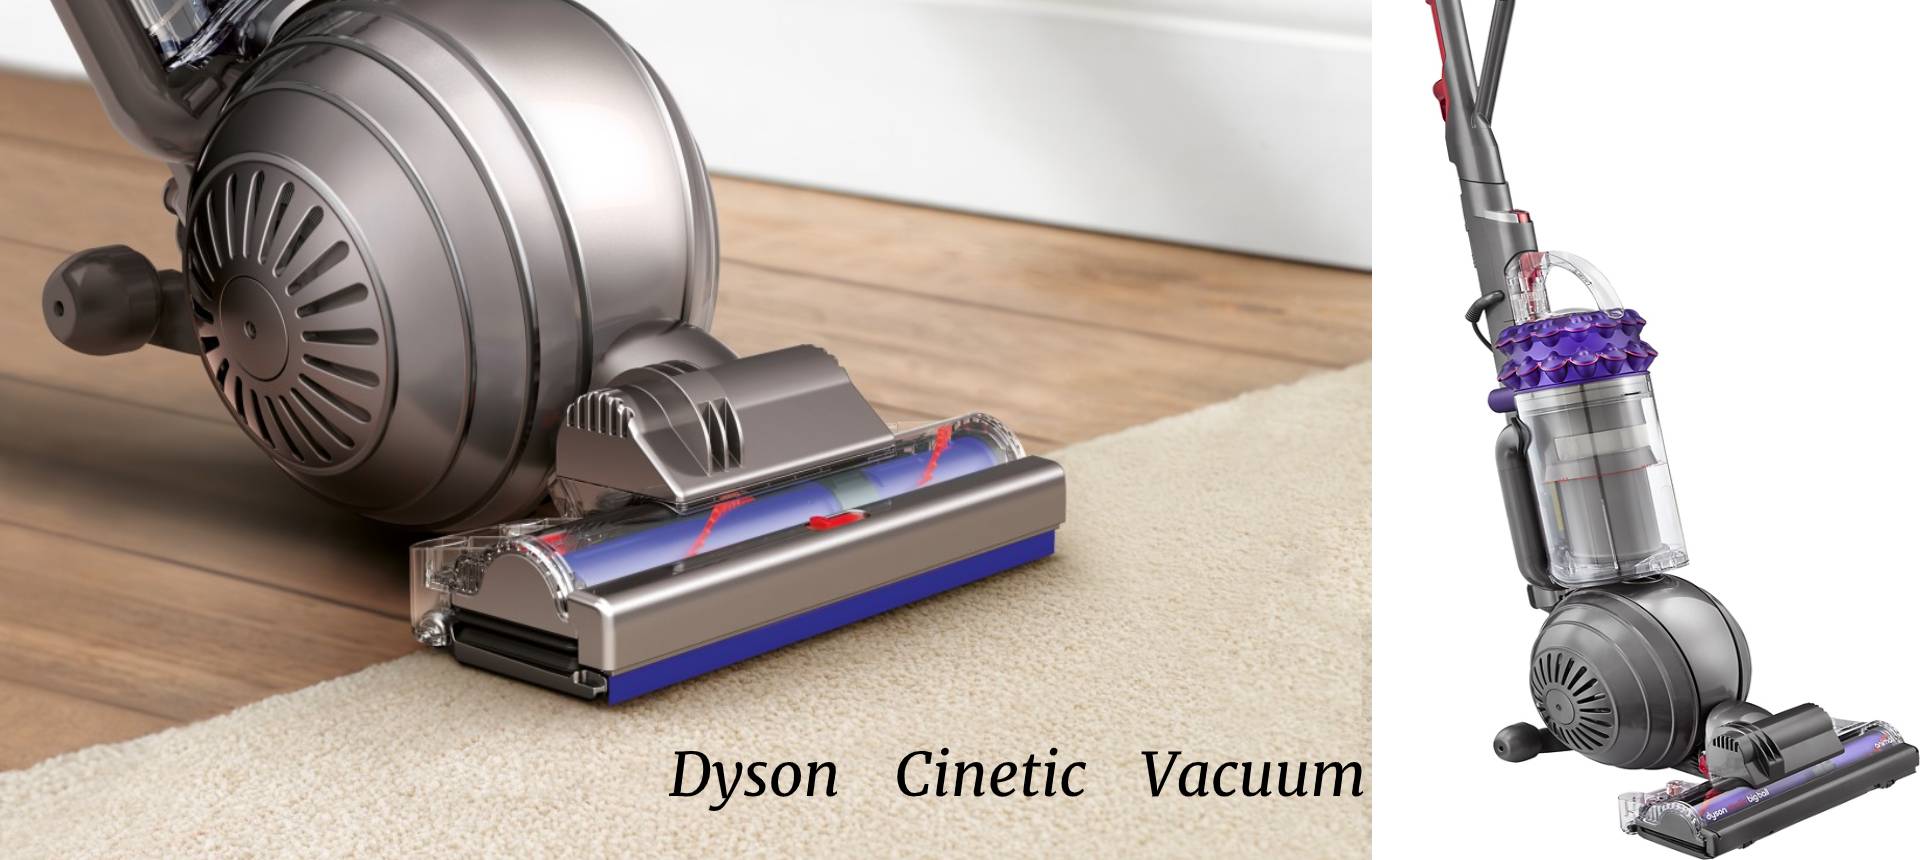 Dyson Cinetic Vacuum